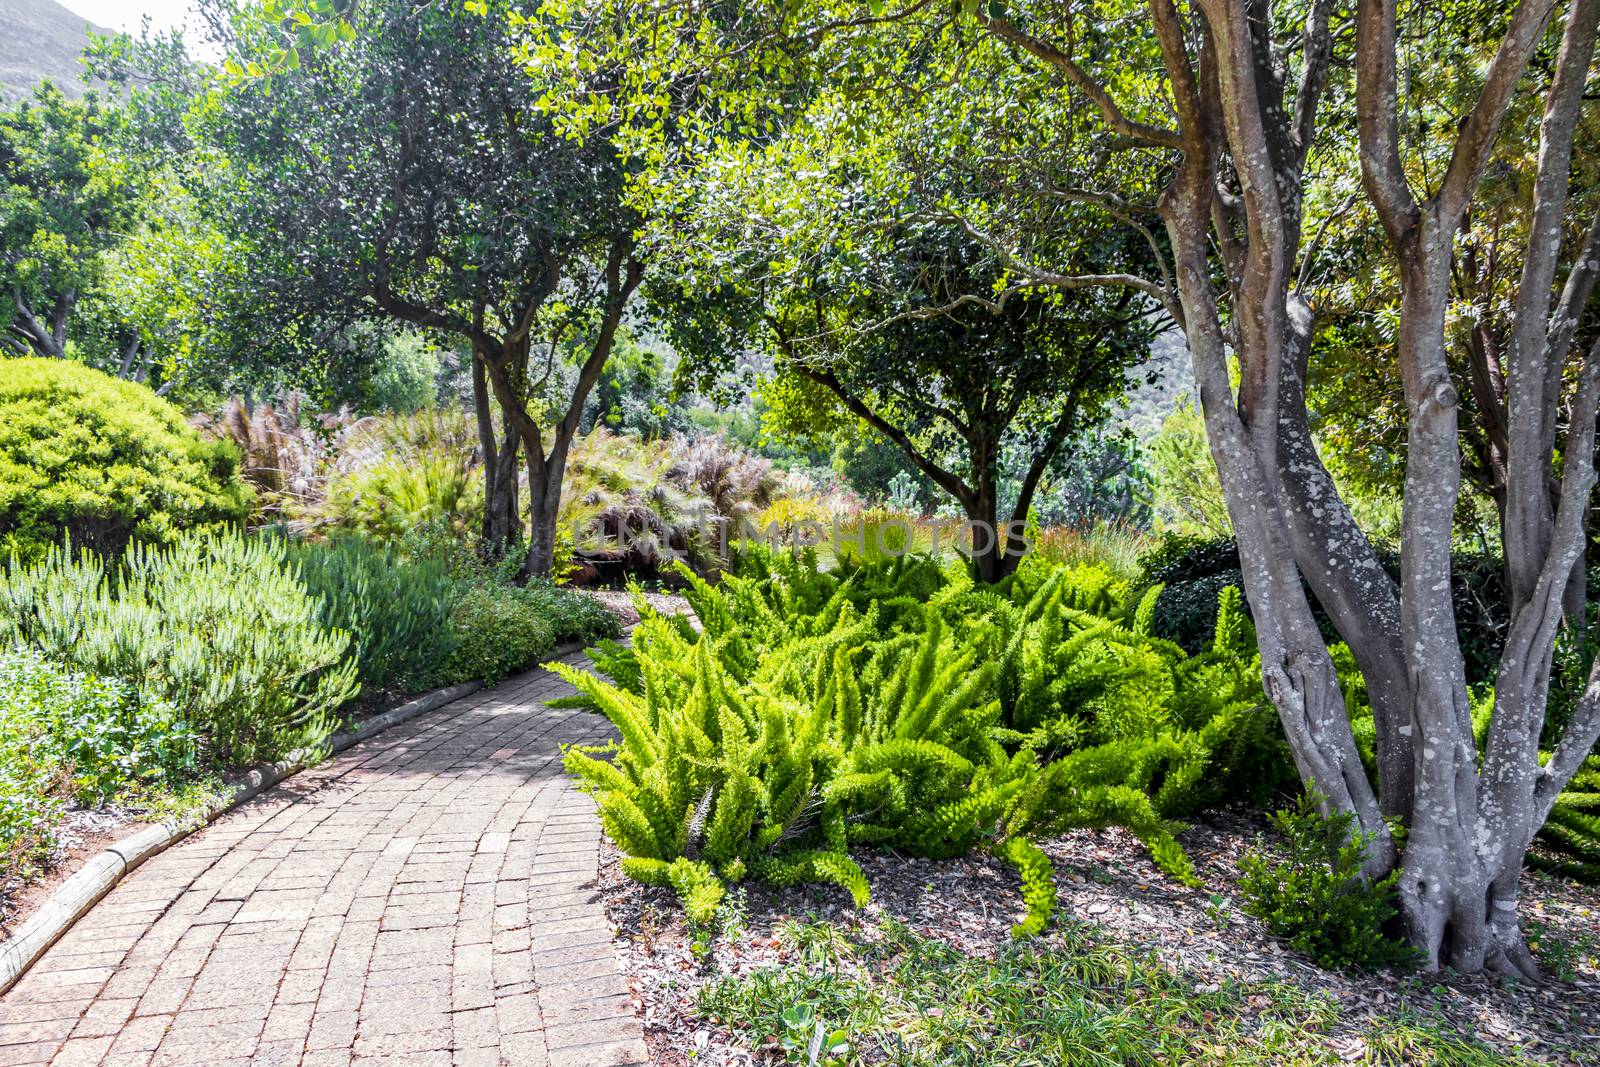 Trail Walking path in Kirstenbosch National Botanical Garden, Cape Town, South Africa.